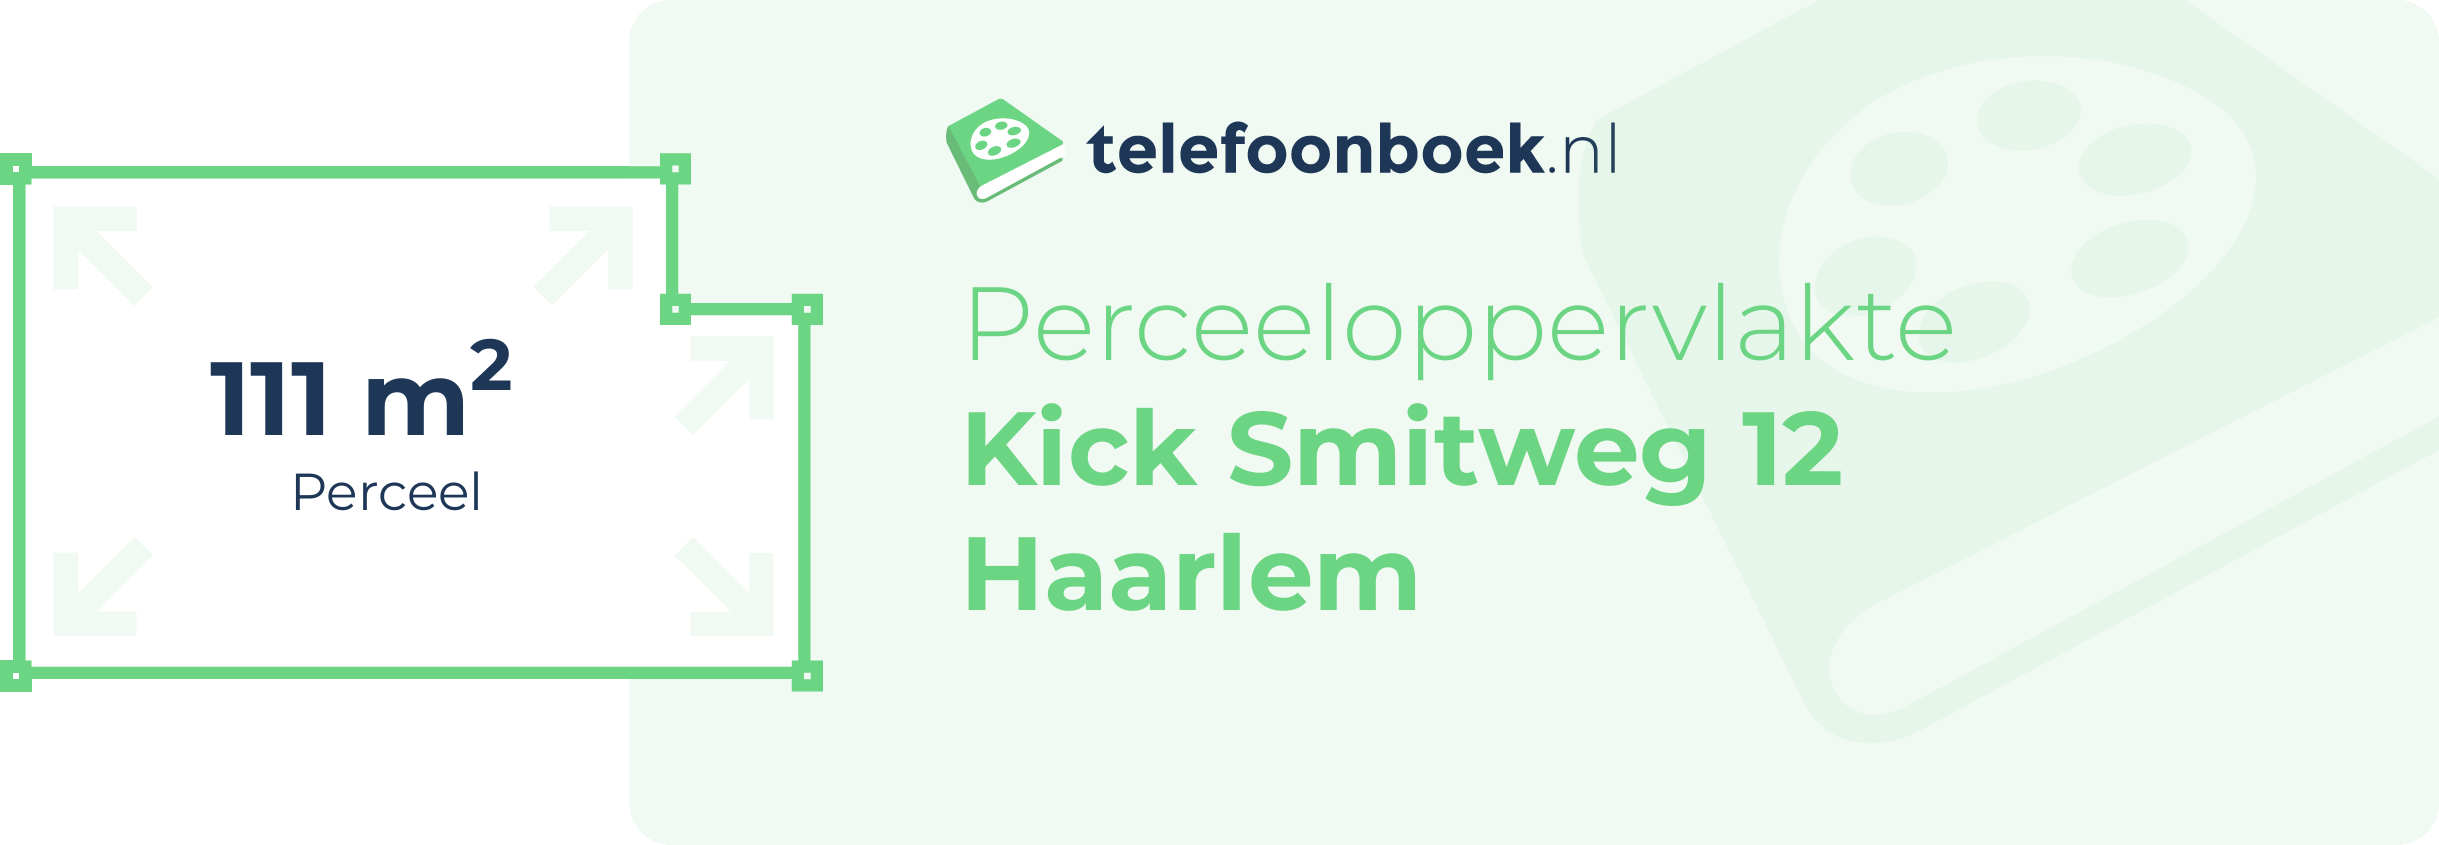 Perceeloppervlakte Kick Smitweg 12 Haarlem